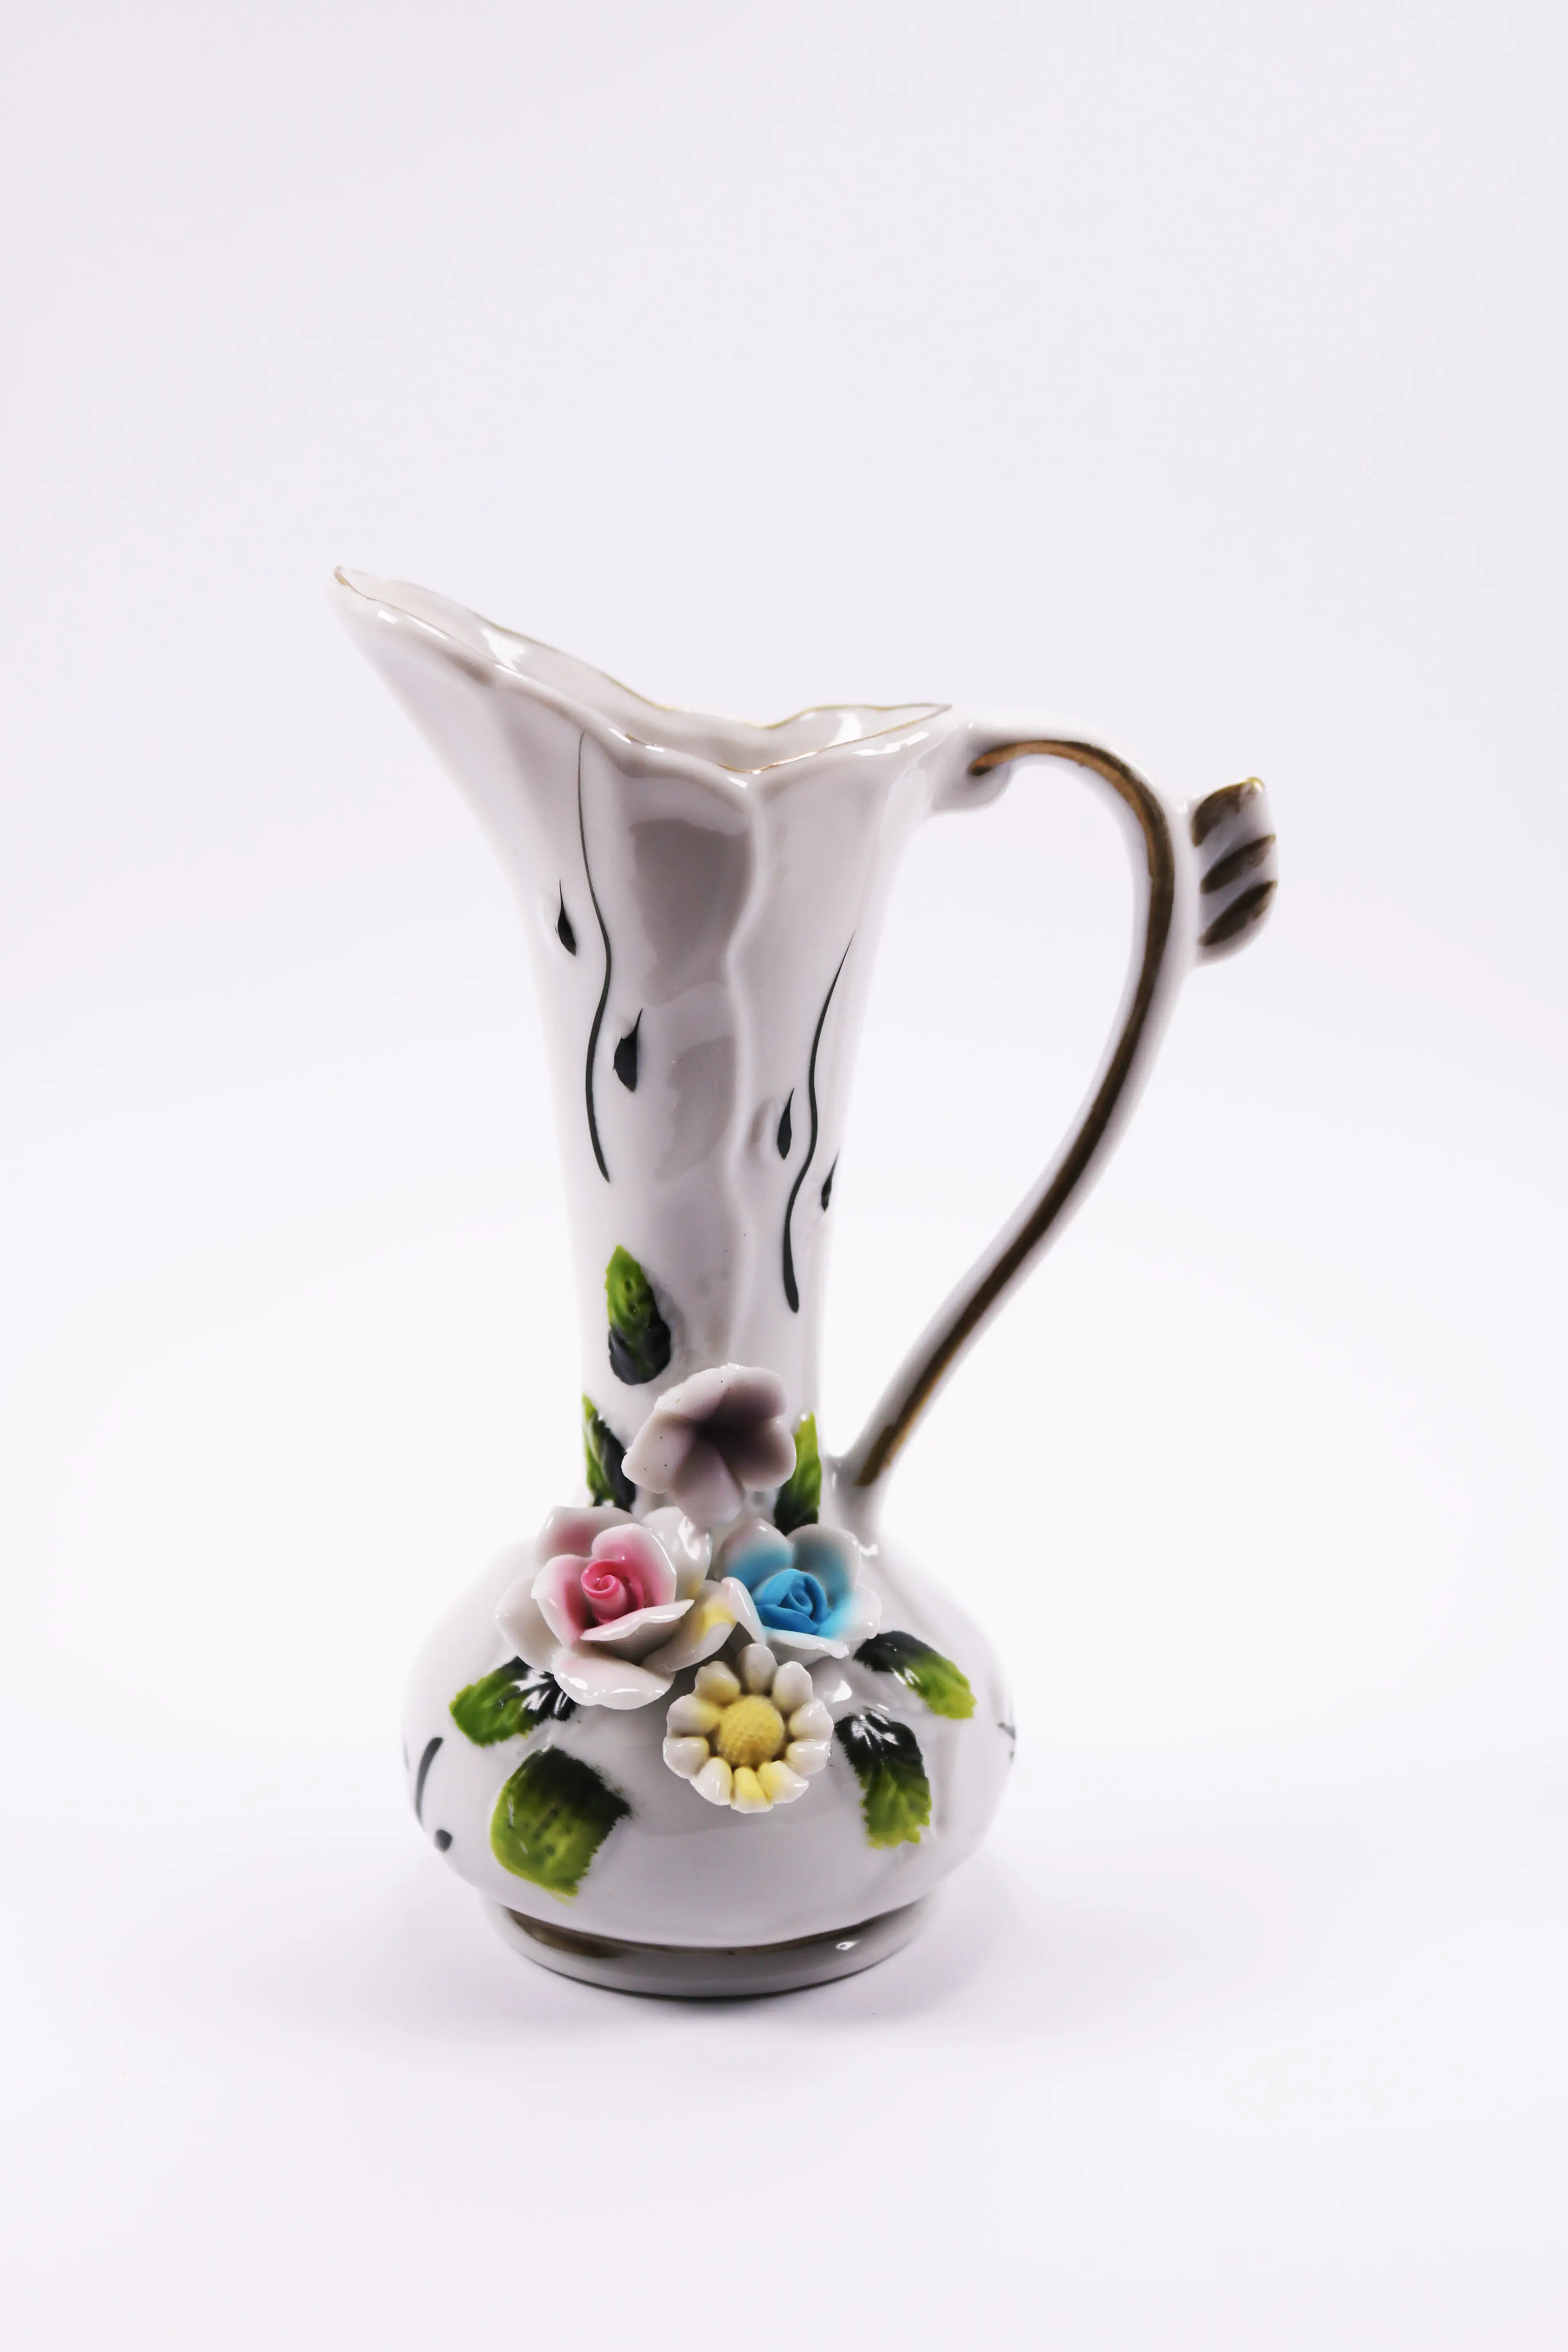 Vintage Italian Capodimonte Decorative Floral Pitcher Vase